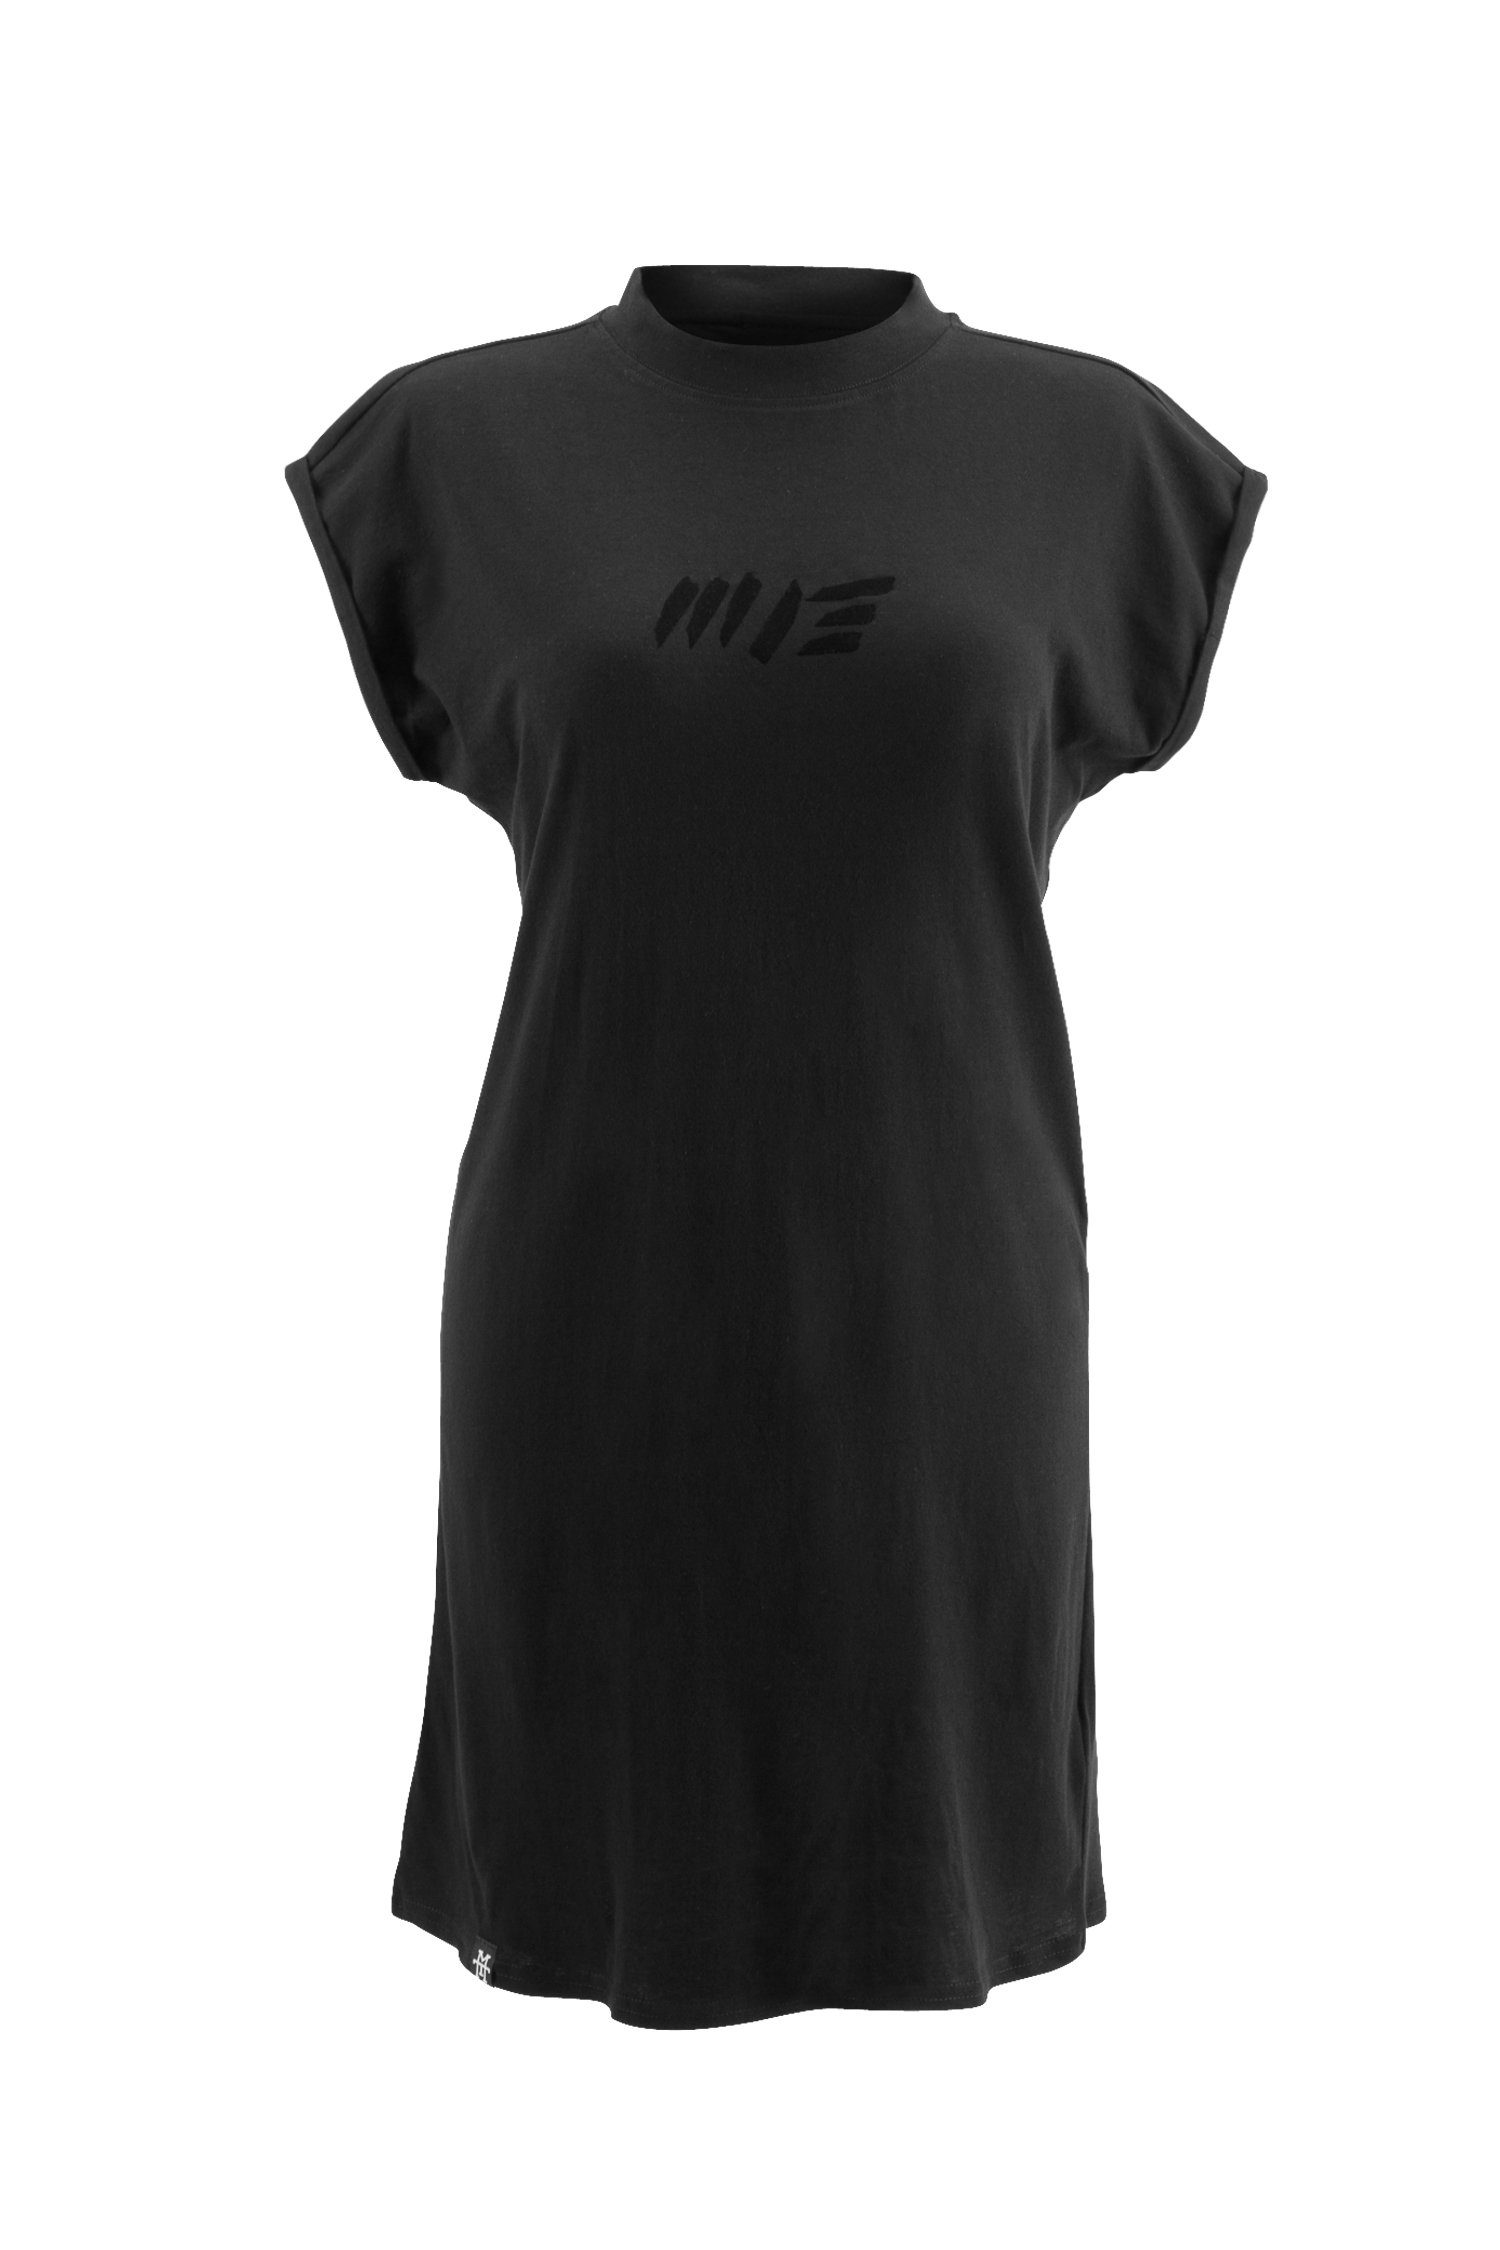 Manufaktur13 Shirtkleid Summer Tee Dress - Sommerkleid, T-Shirt Kleid, Jerseykleid 100% Baumwolle Black Out